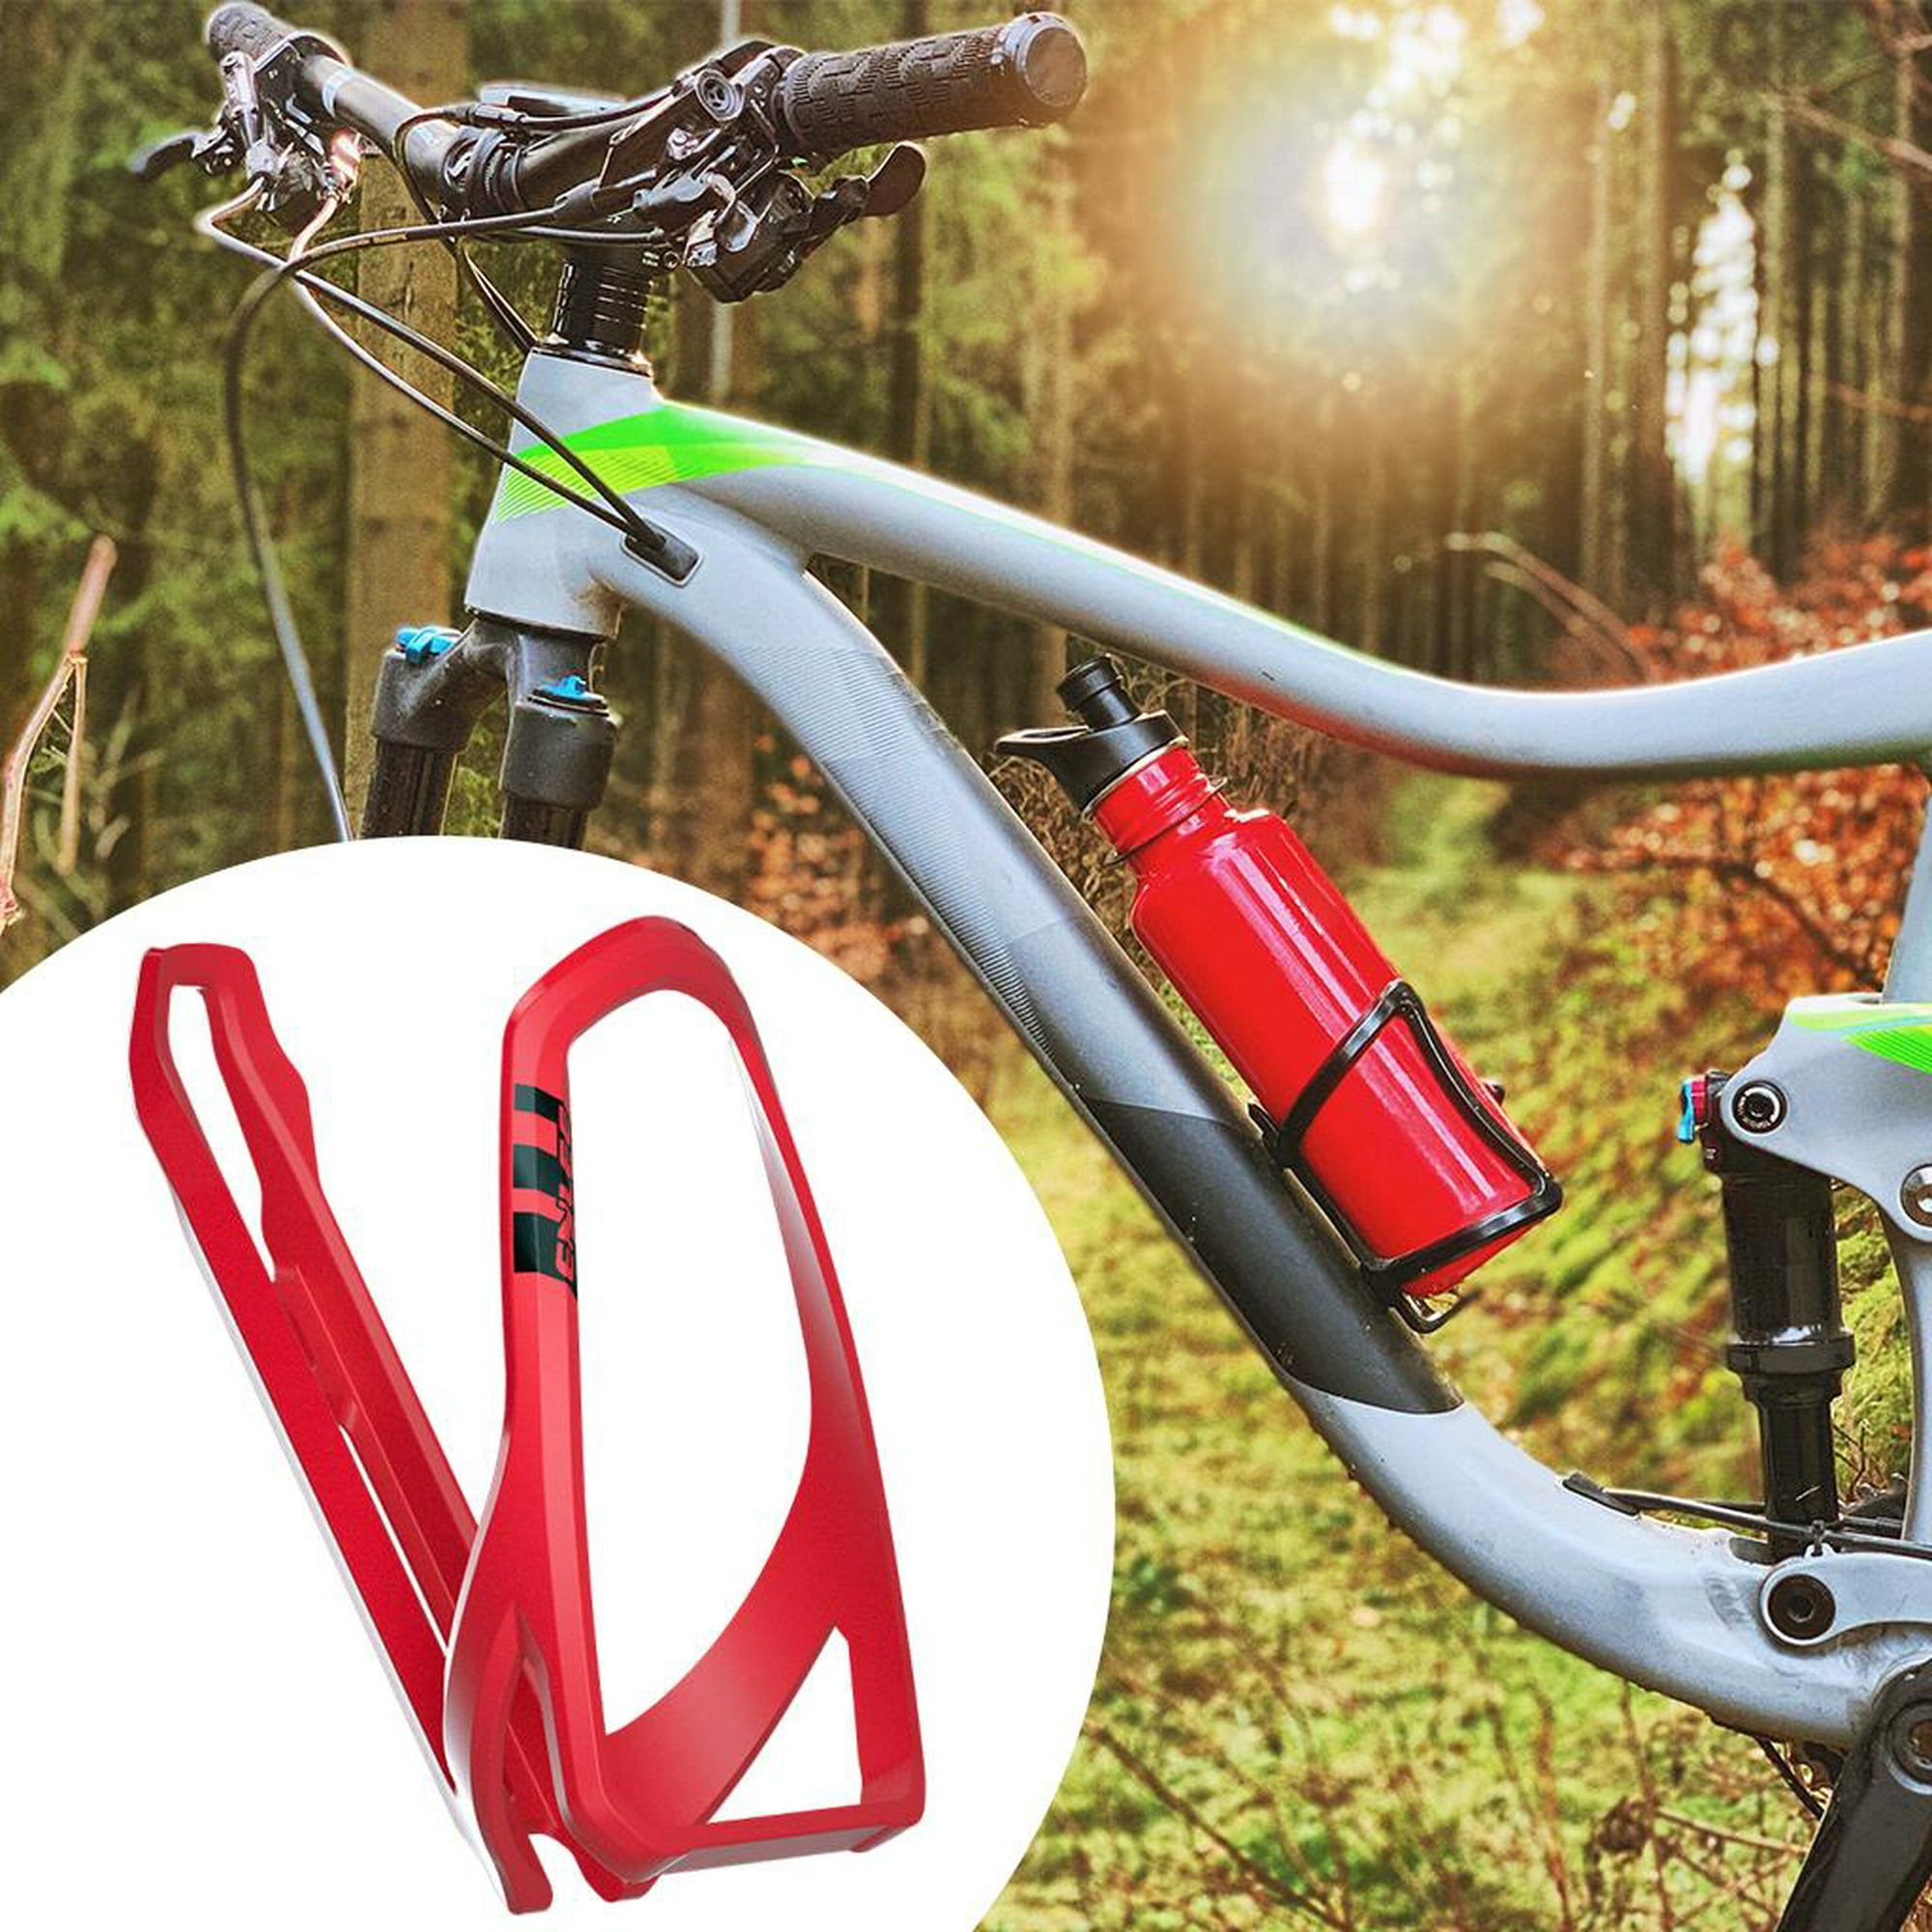 GENERICO Soporte para botella de agua para bicicleta - Rojo